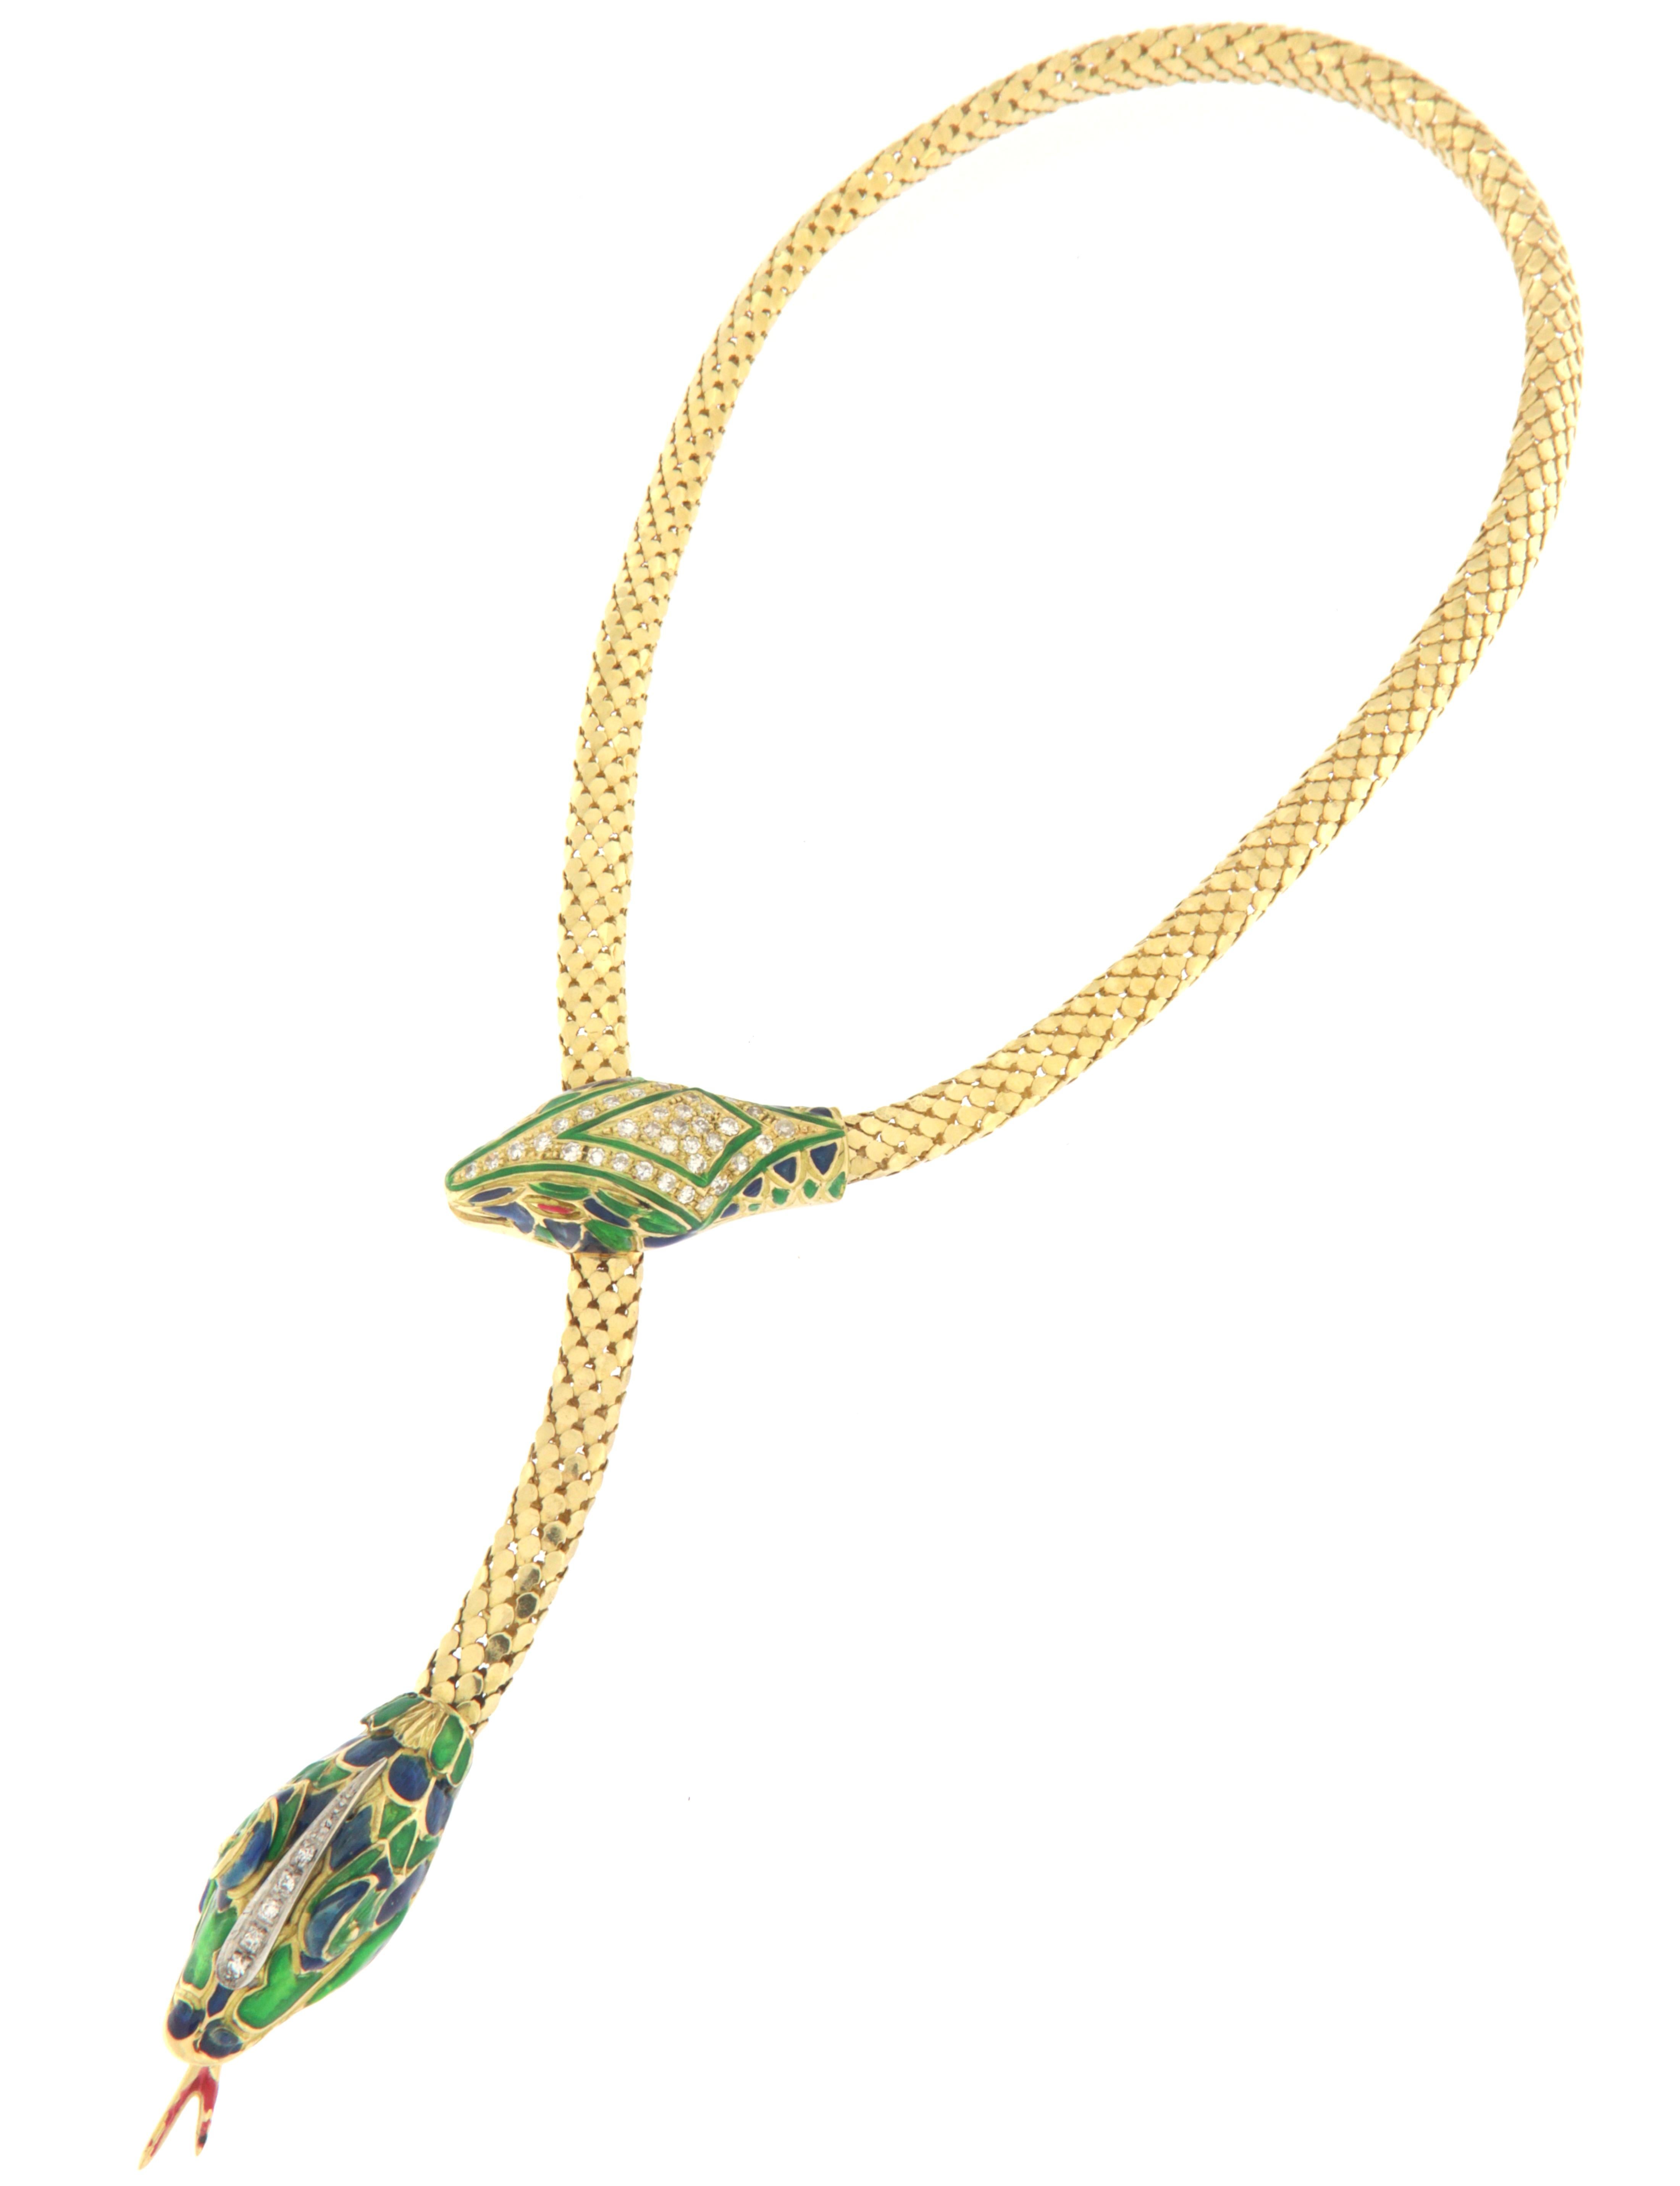 Brilliant Cut Diamonds Snake 18 Karat Yellow Gold Choker Necklace